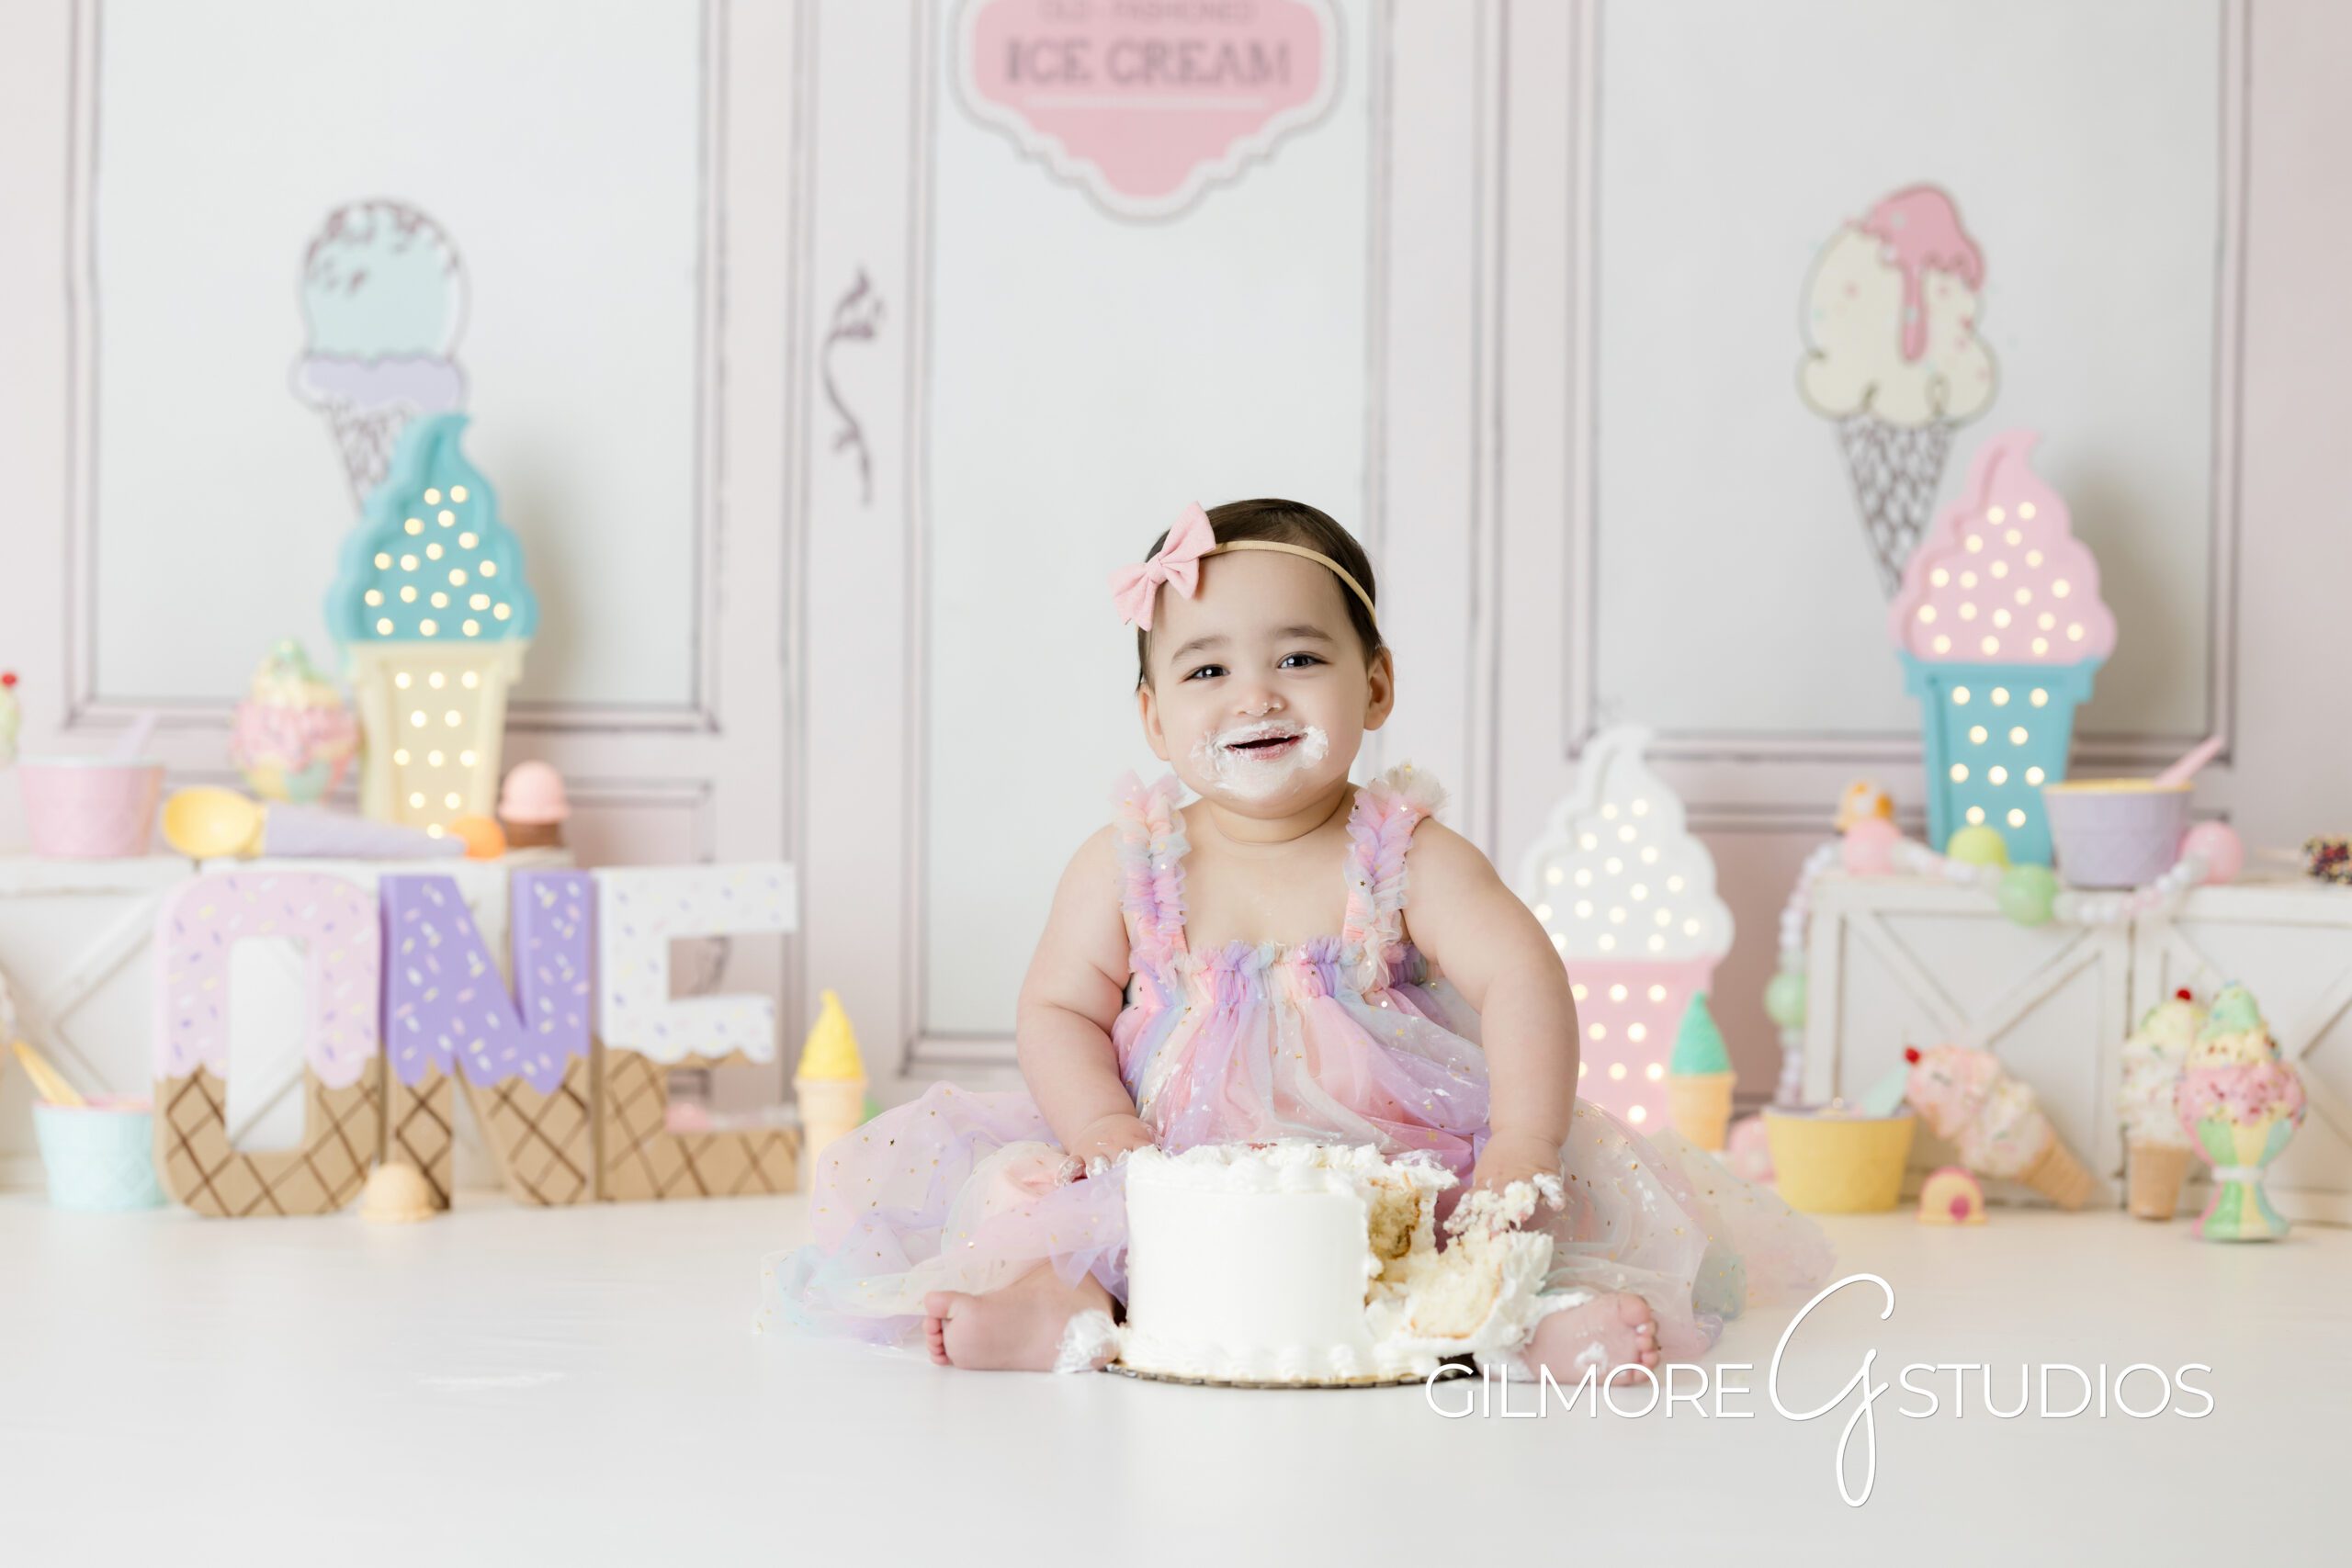 ice cream theme cake Smash, little girl, white cake, ice cream theme, ice cream parlor, pink dress, eating cake, Gilmore Studios